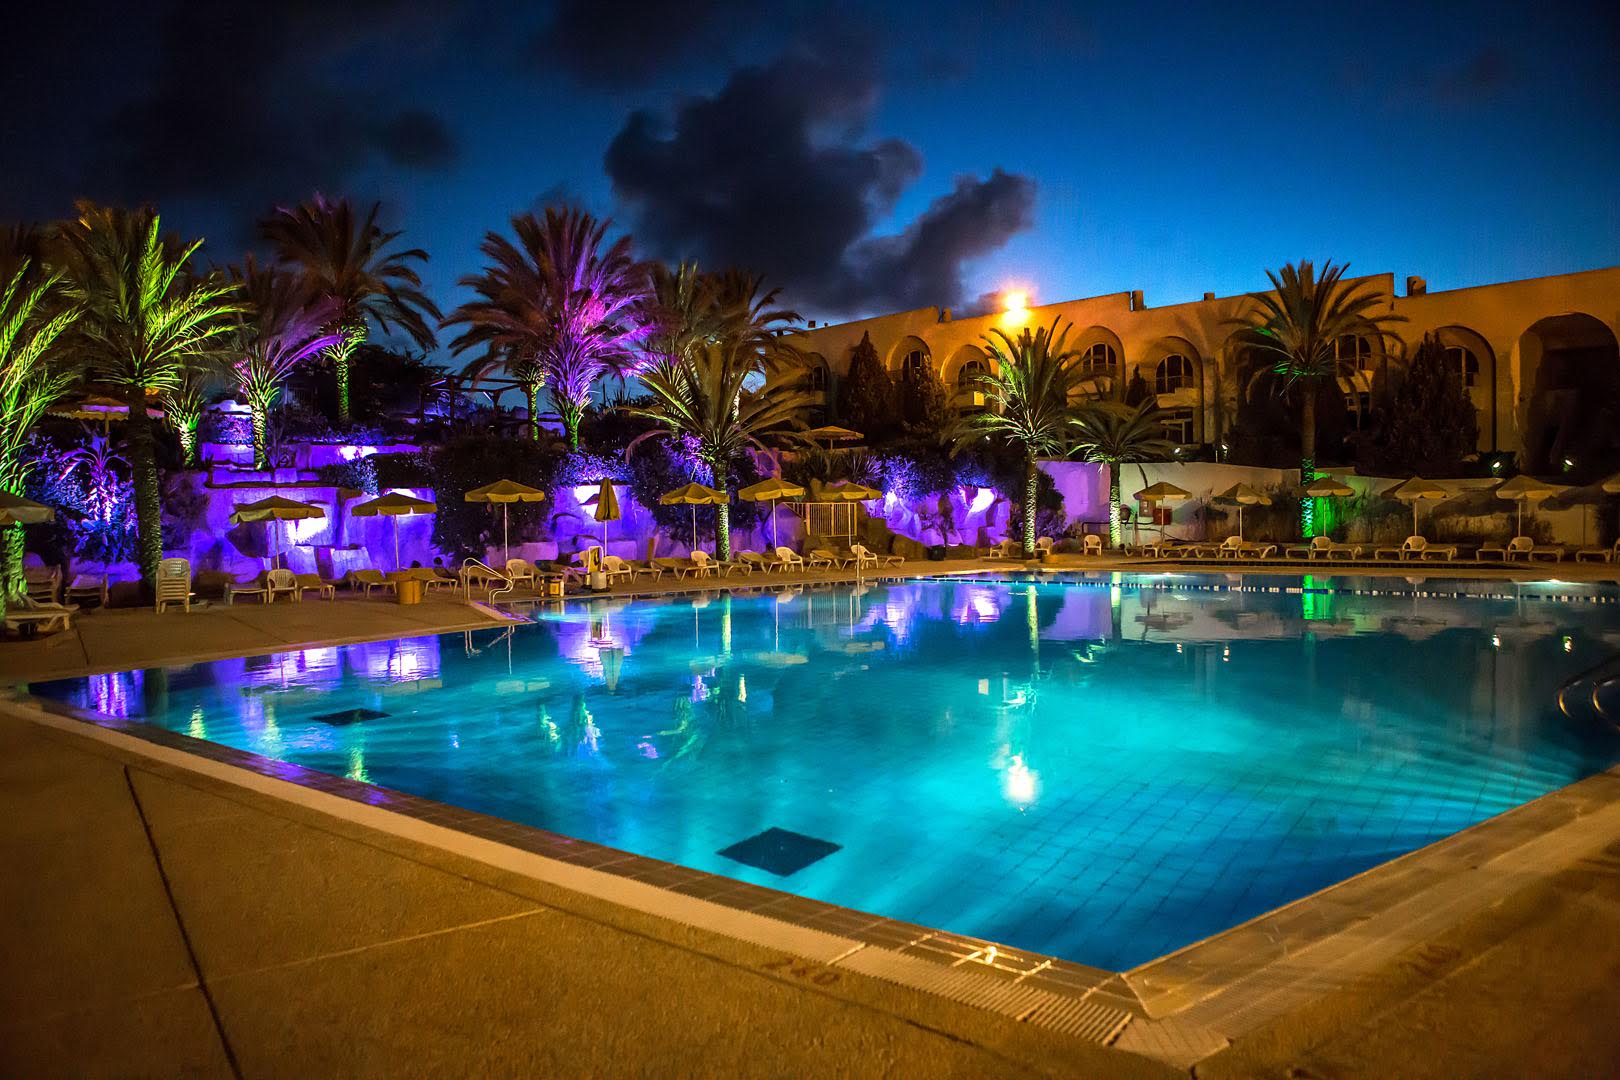 Pool at Eshel HaShomron hotel in Ariel 